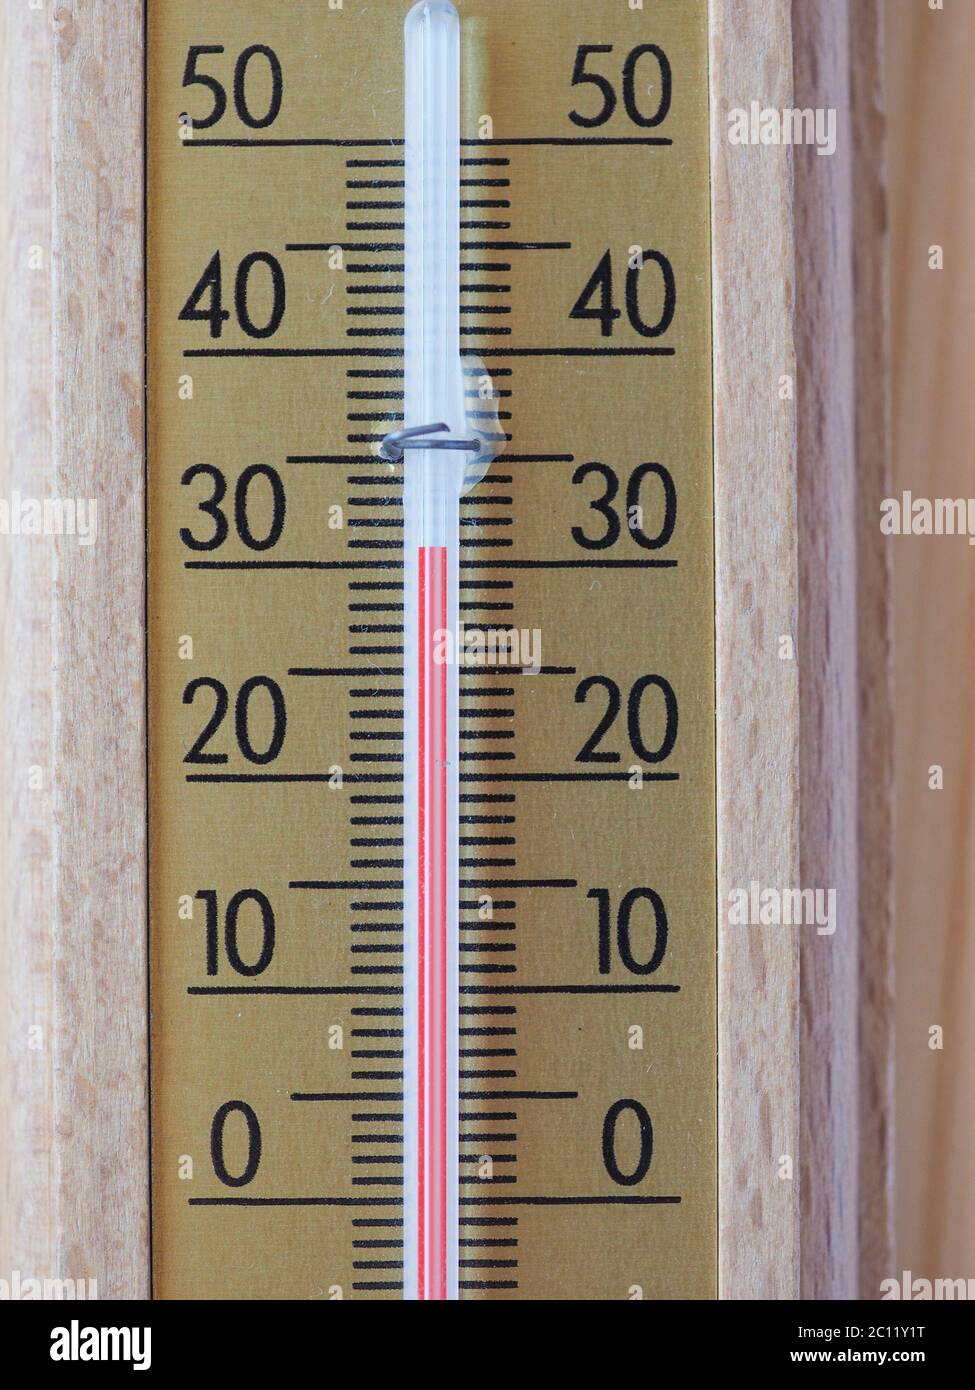 https://c8.alamy.com/comp/2C11Y1T/thermometer-for-air-temperature-measurement-2C11Y1T.jpg